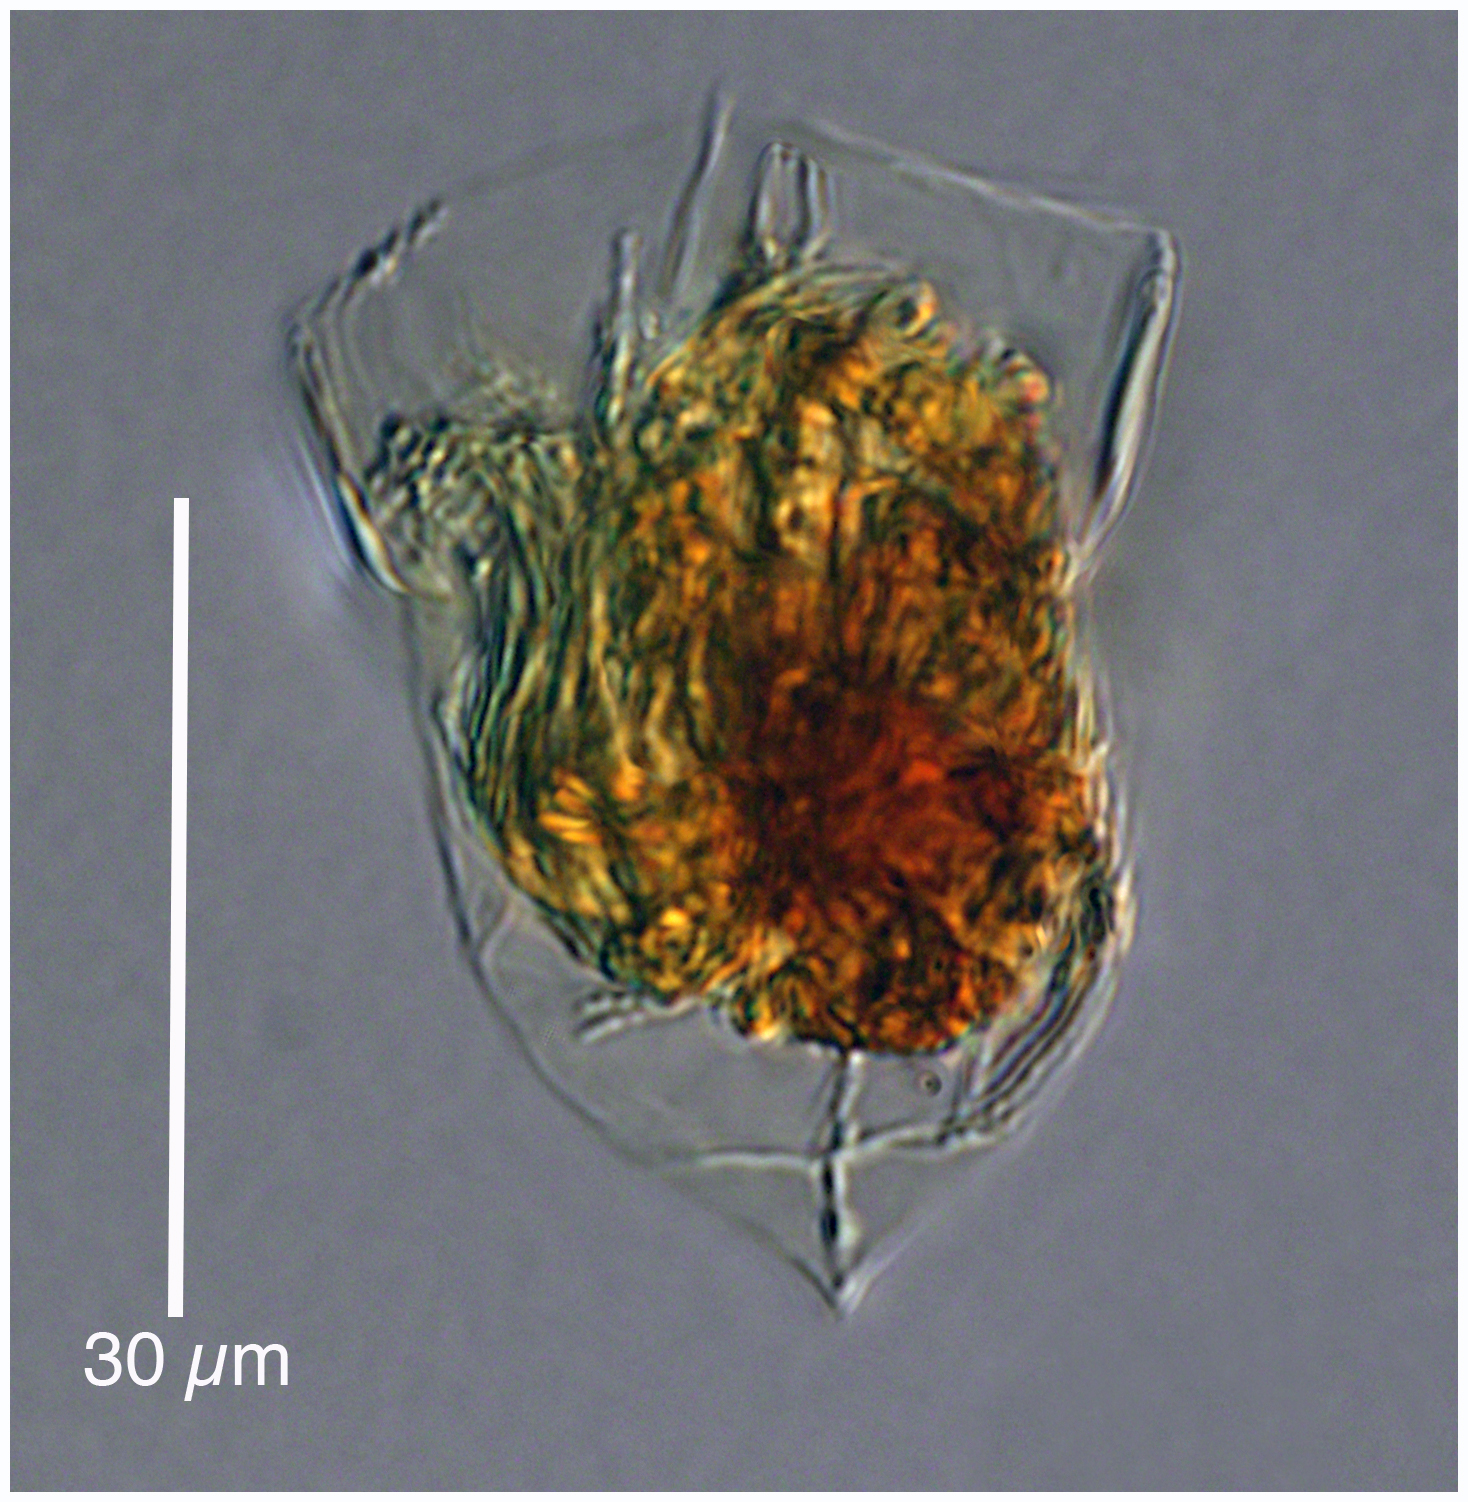 Tiny Amphorellopsis found in deep water